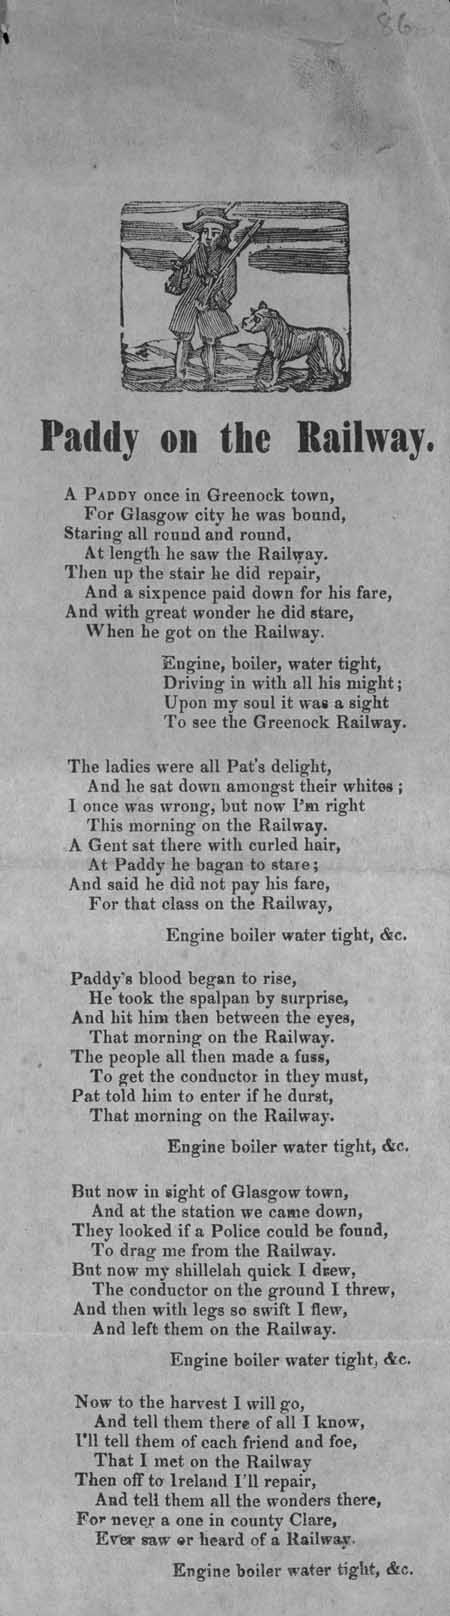 Broadside ballad entitled 'Paddy on the Railway'